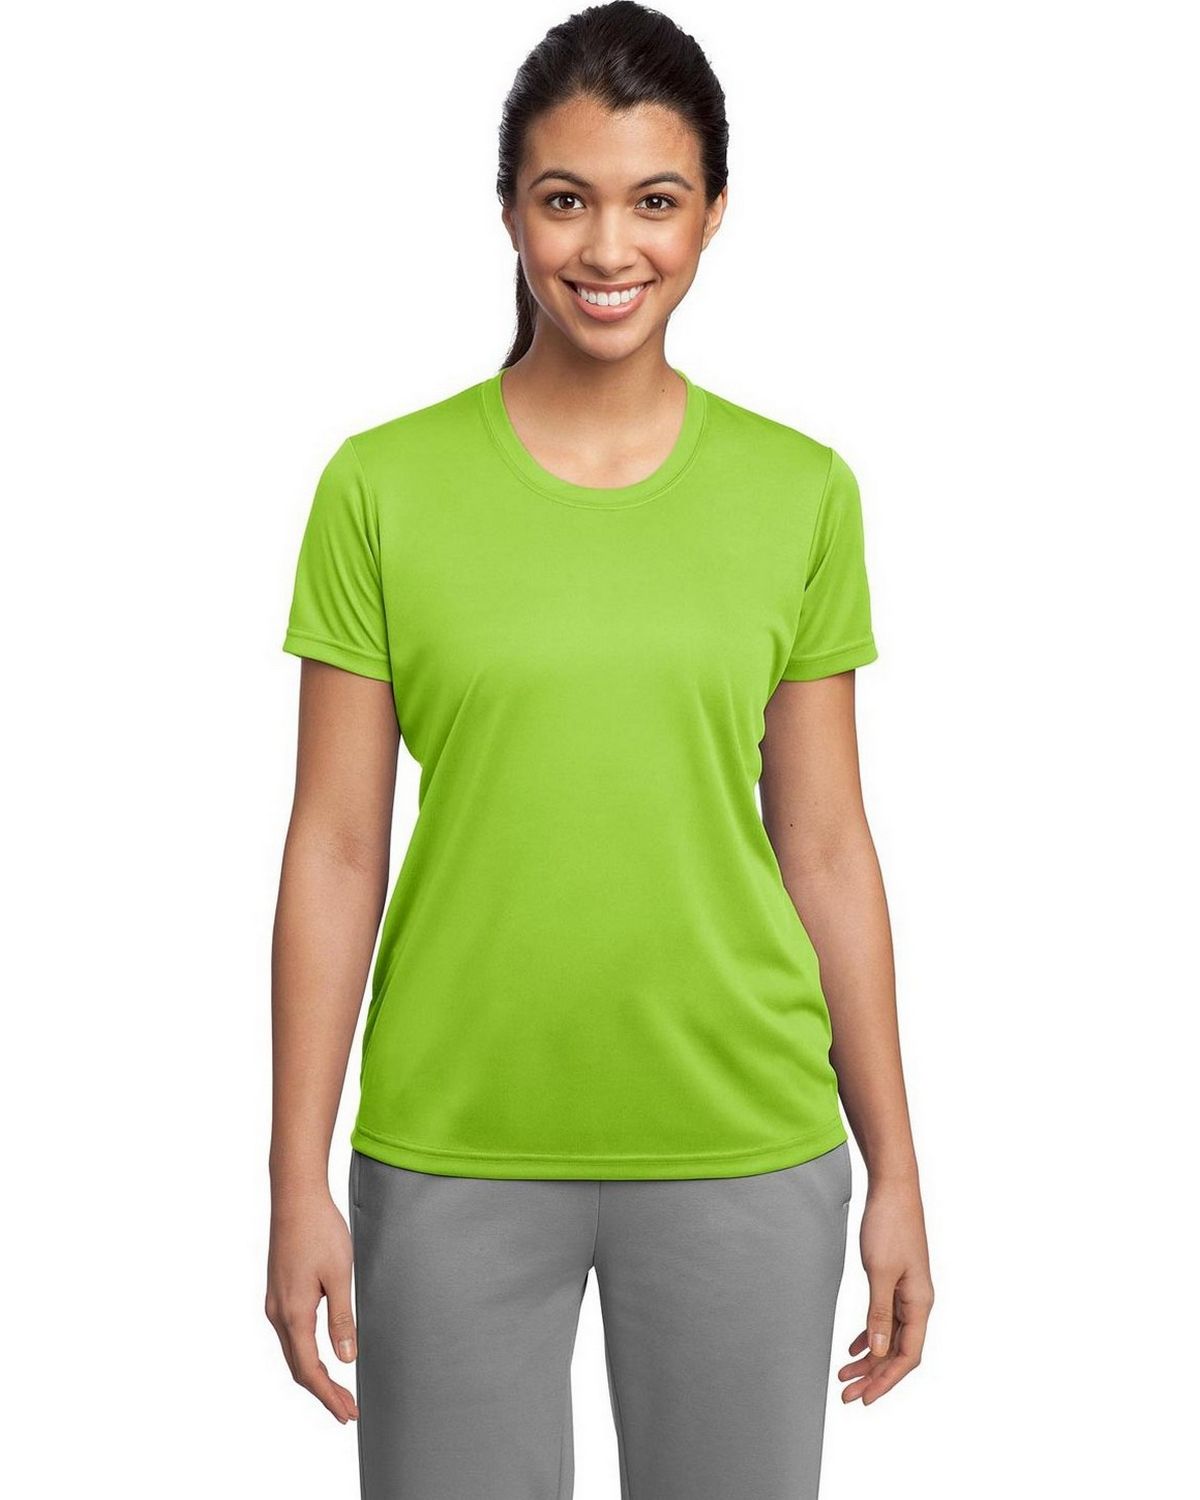 Womens Sport-Tek Dry Fit Gym Workout Performance Moisture Wicking T-Shirt LST350